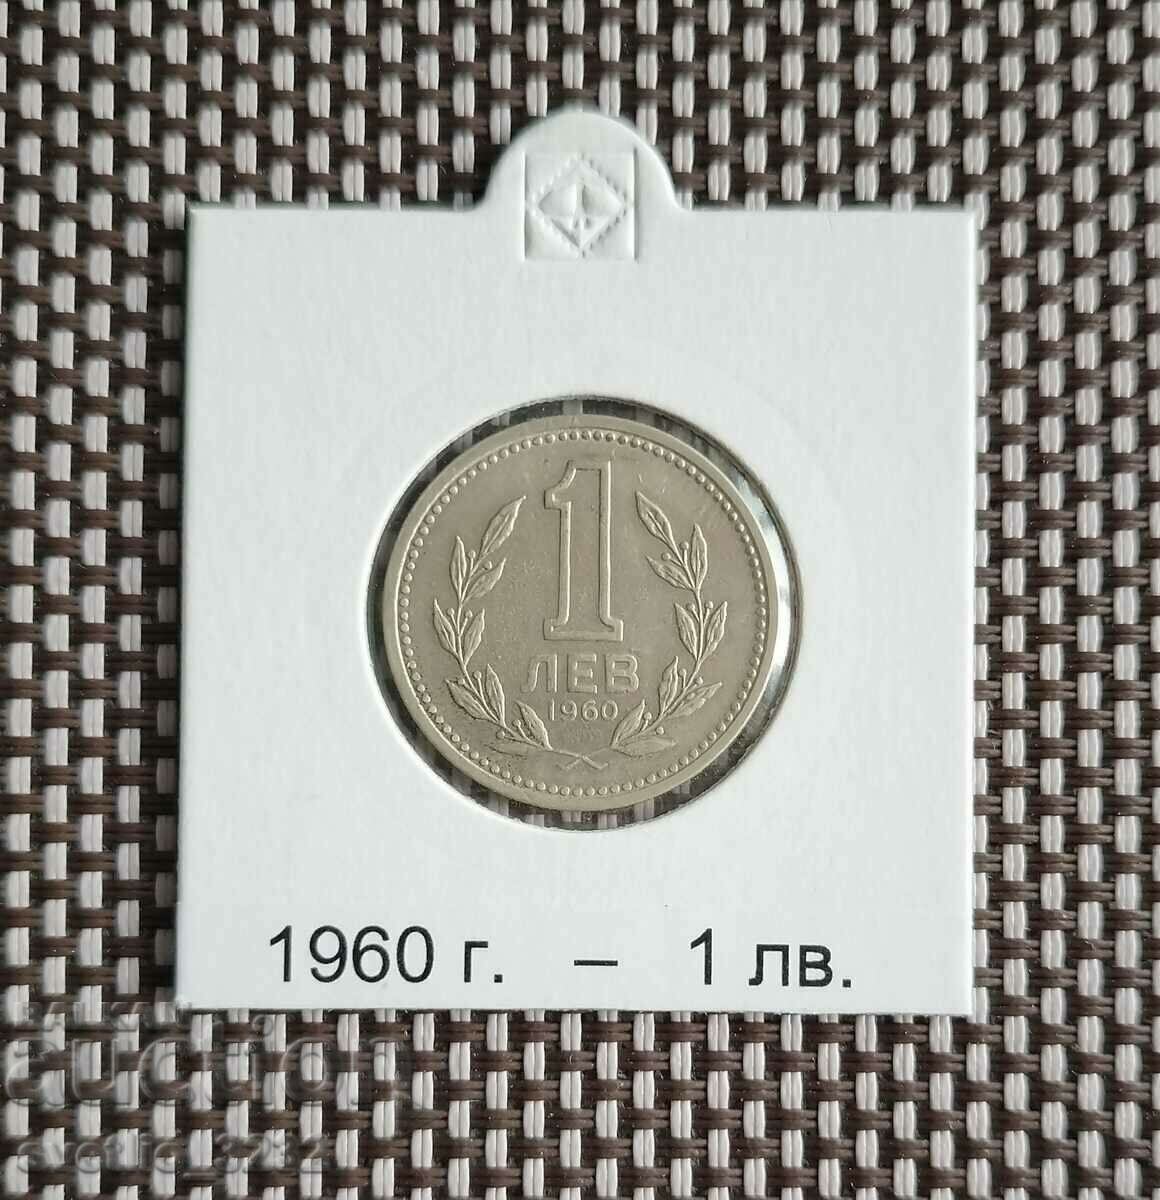 1 BGN 1960